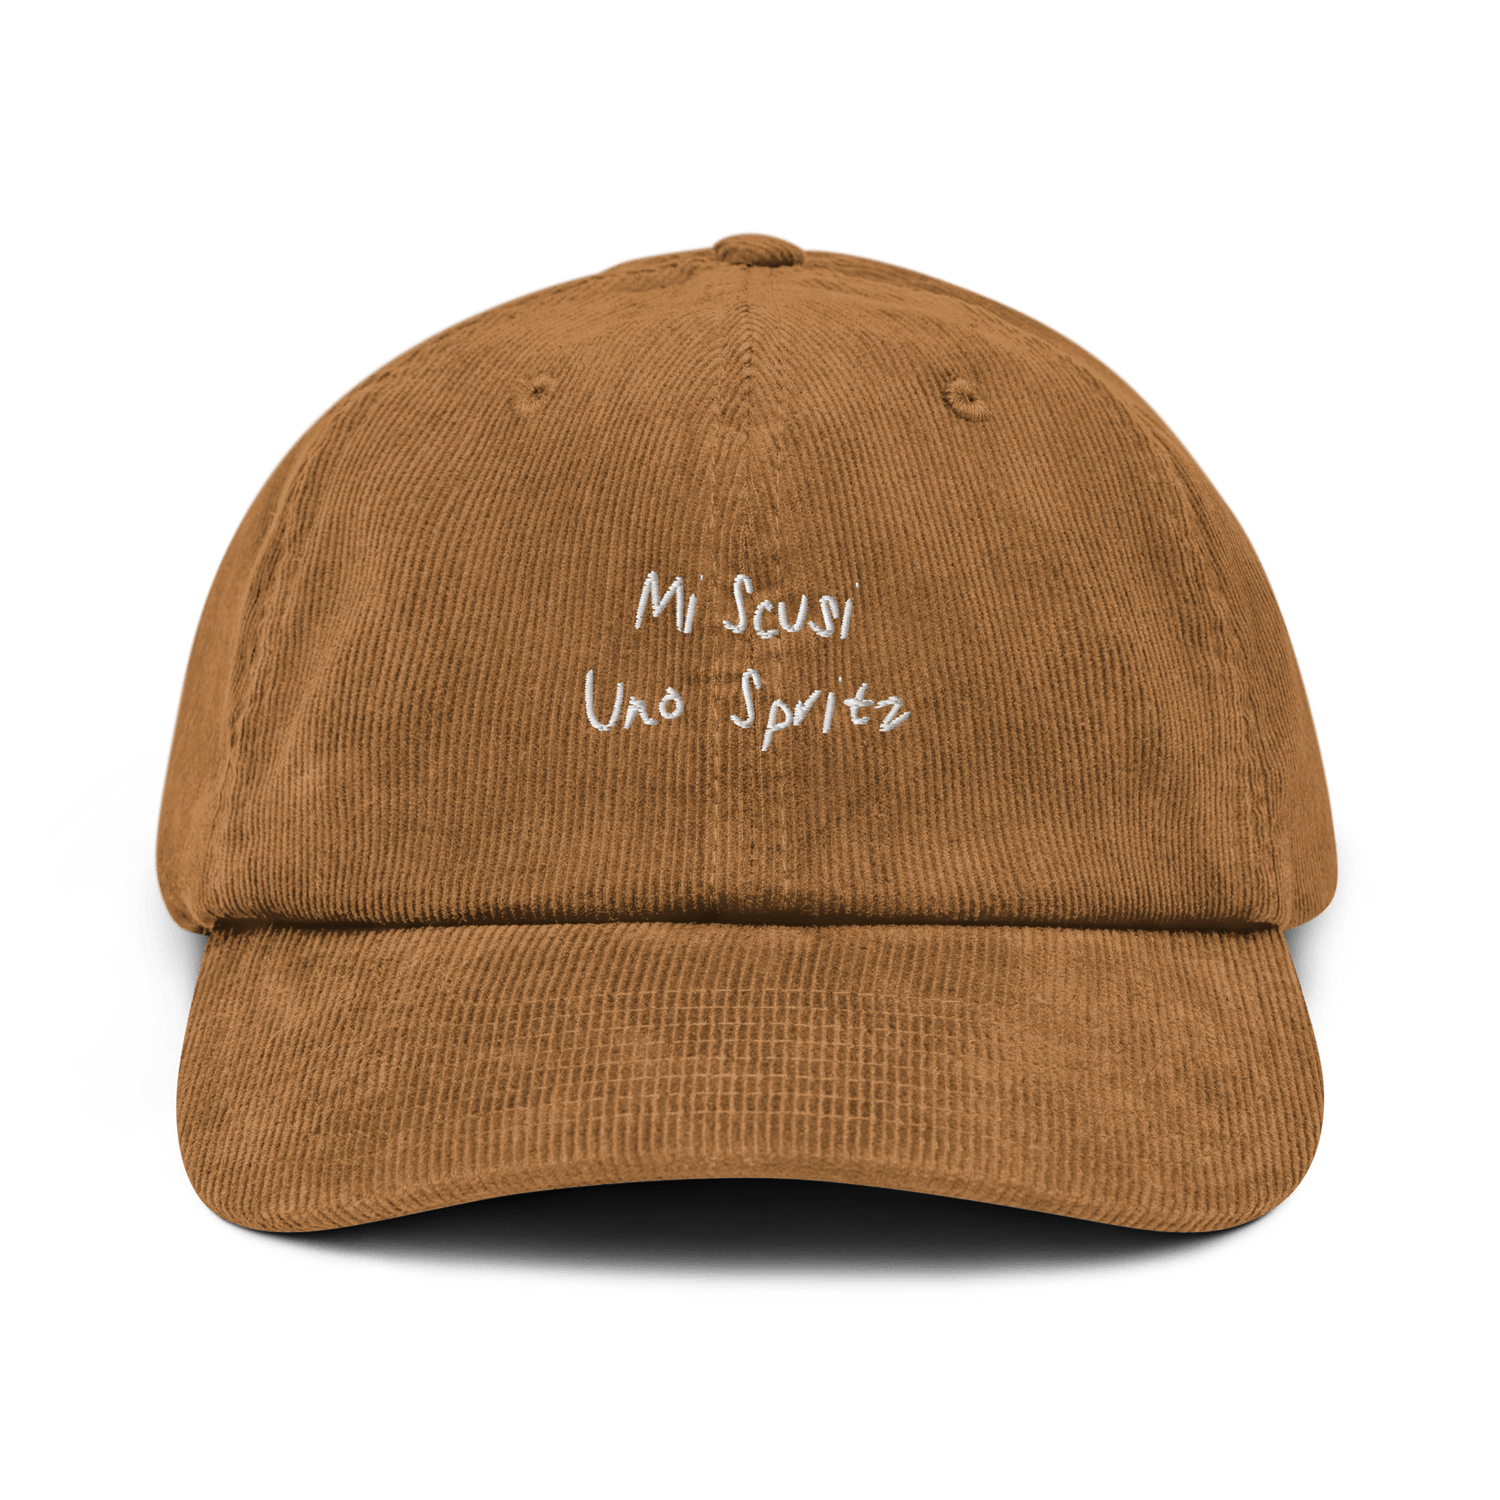 The Scusi Spritz Corduroy hat